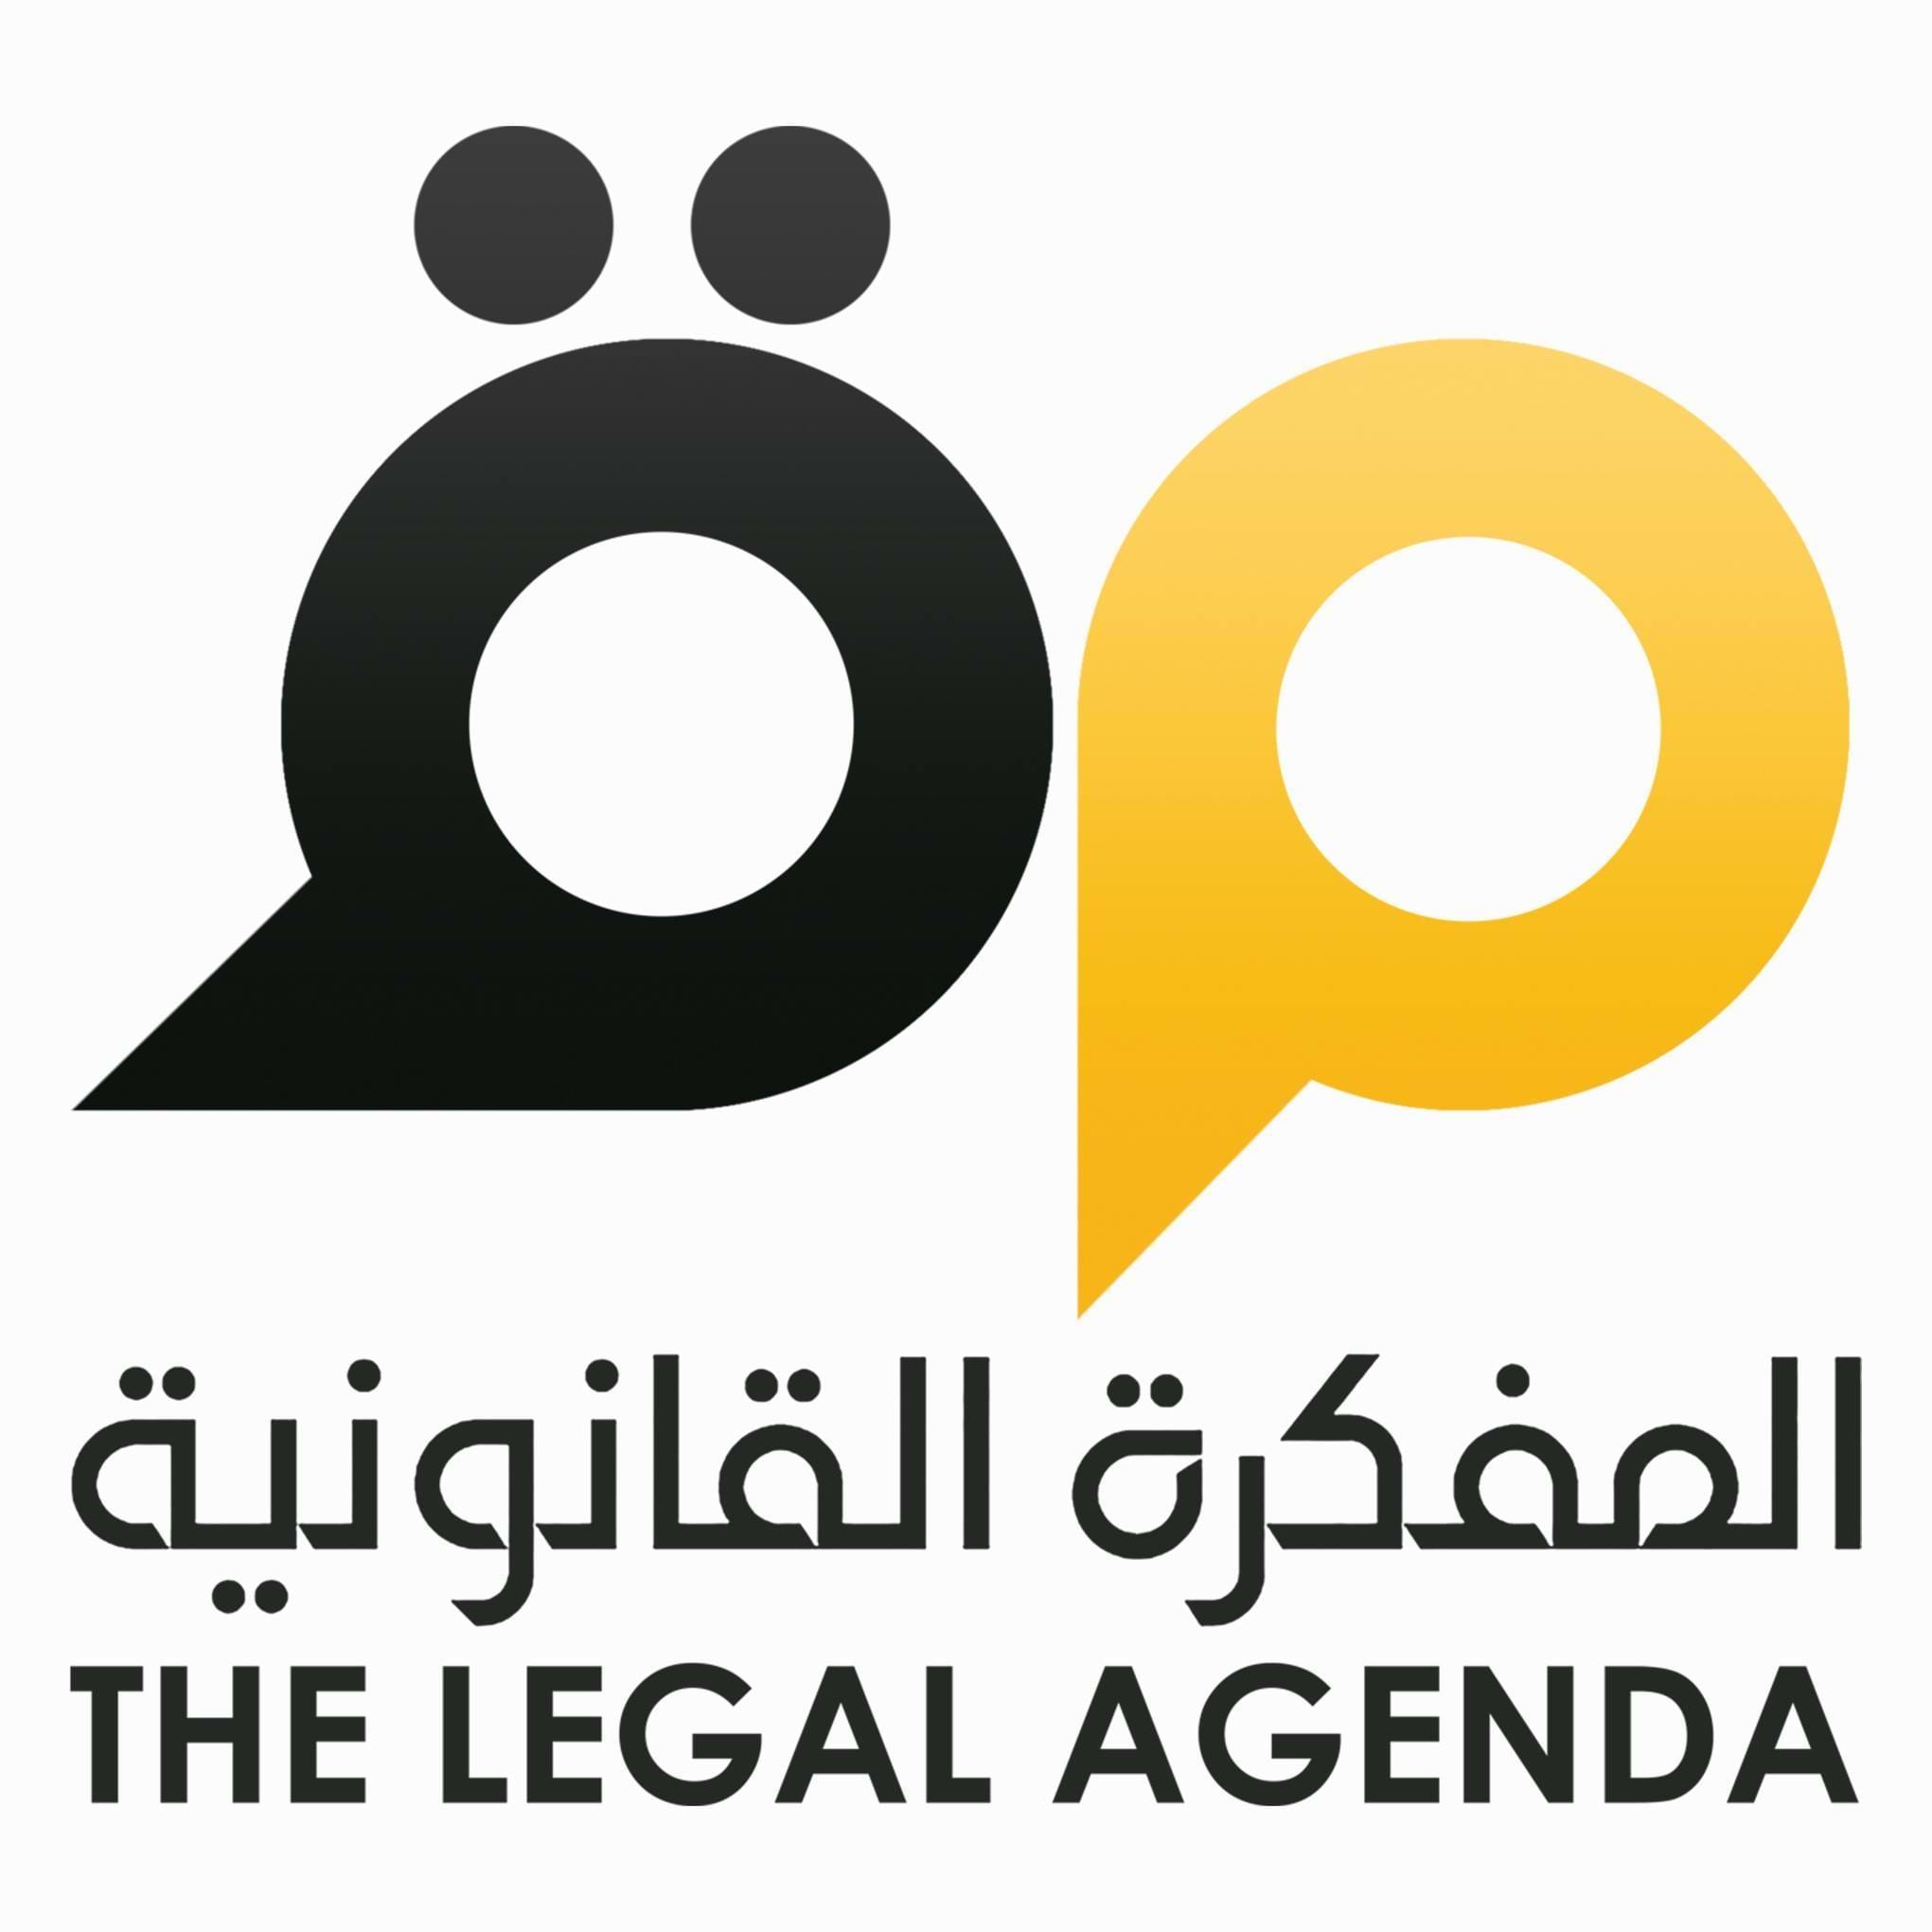 The Legal Agenda logo